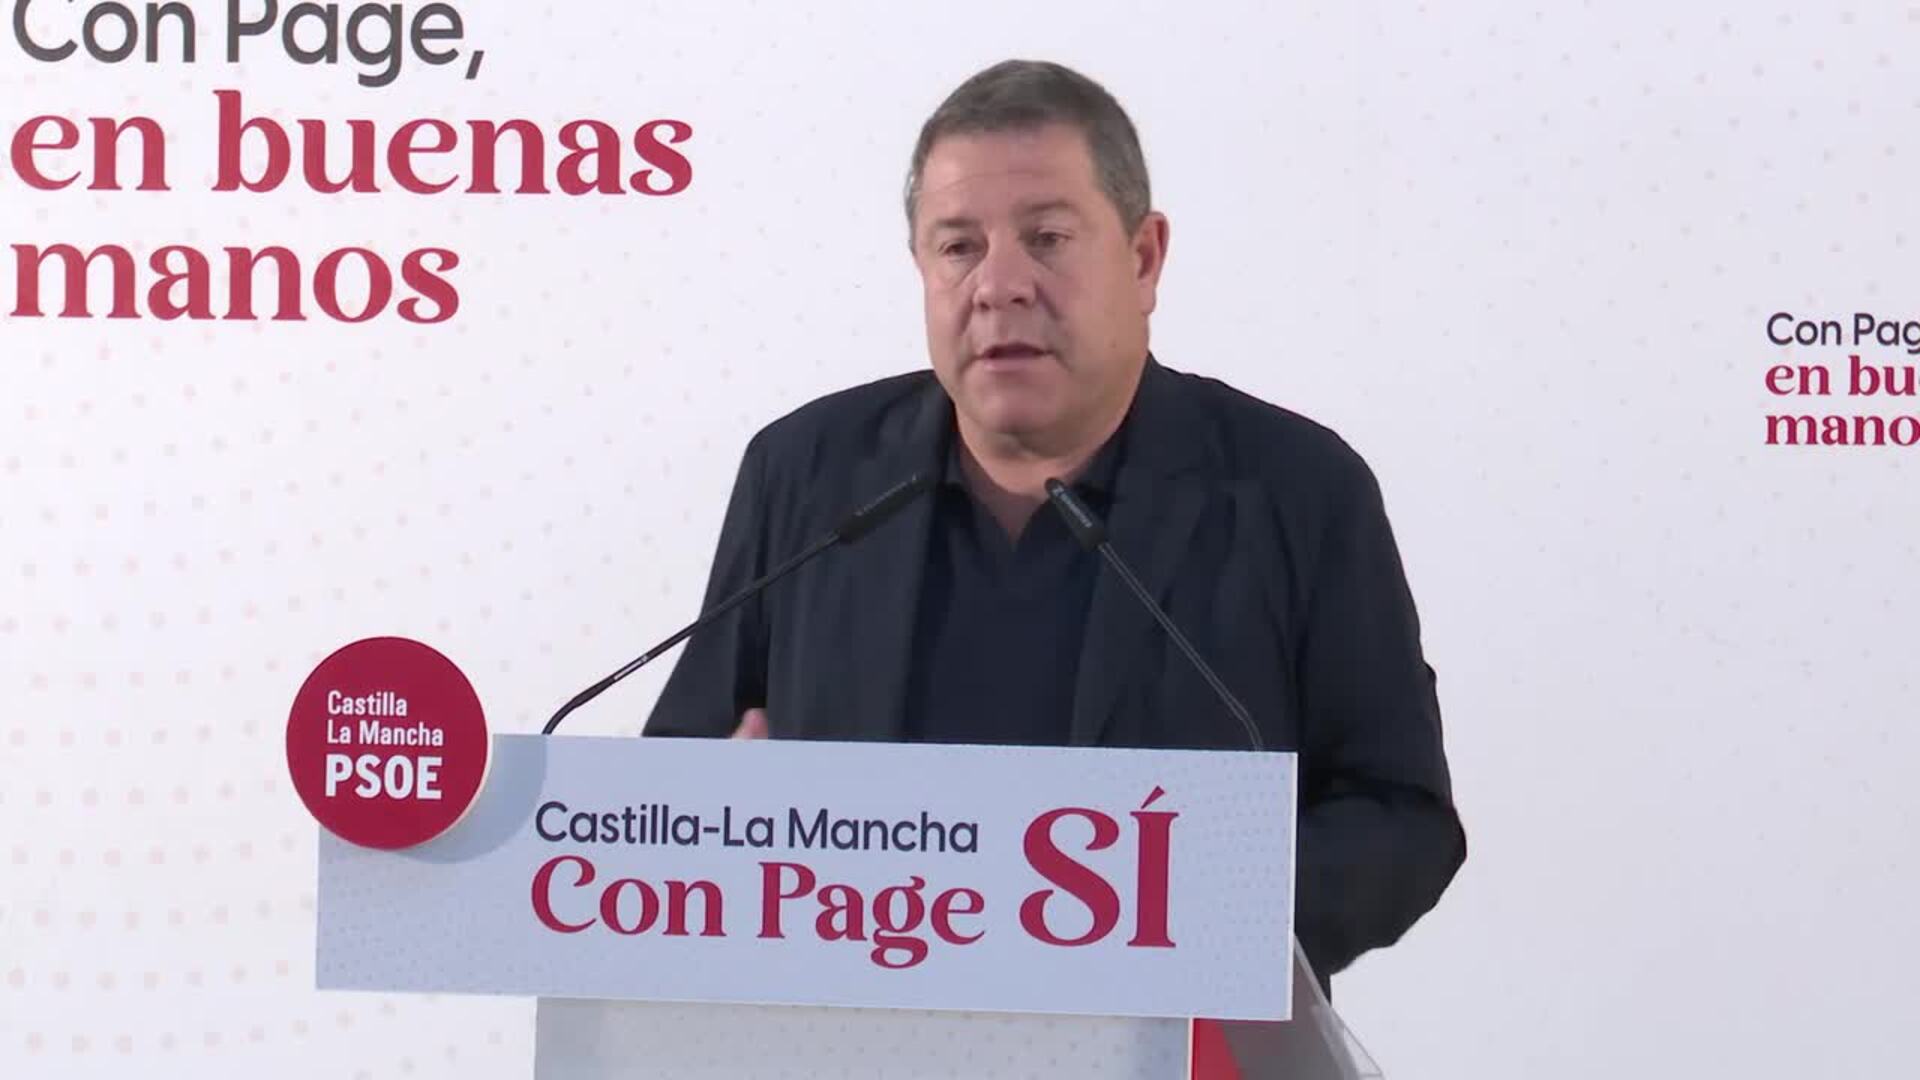 Page veta calumnias de Núñez antes del debate: "Luego me dirá que son cosas de política"